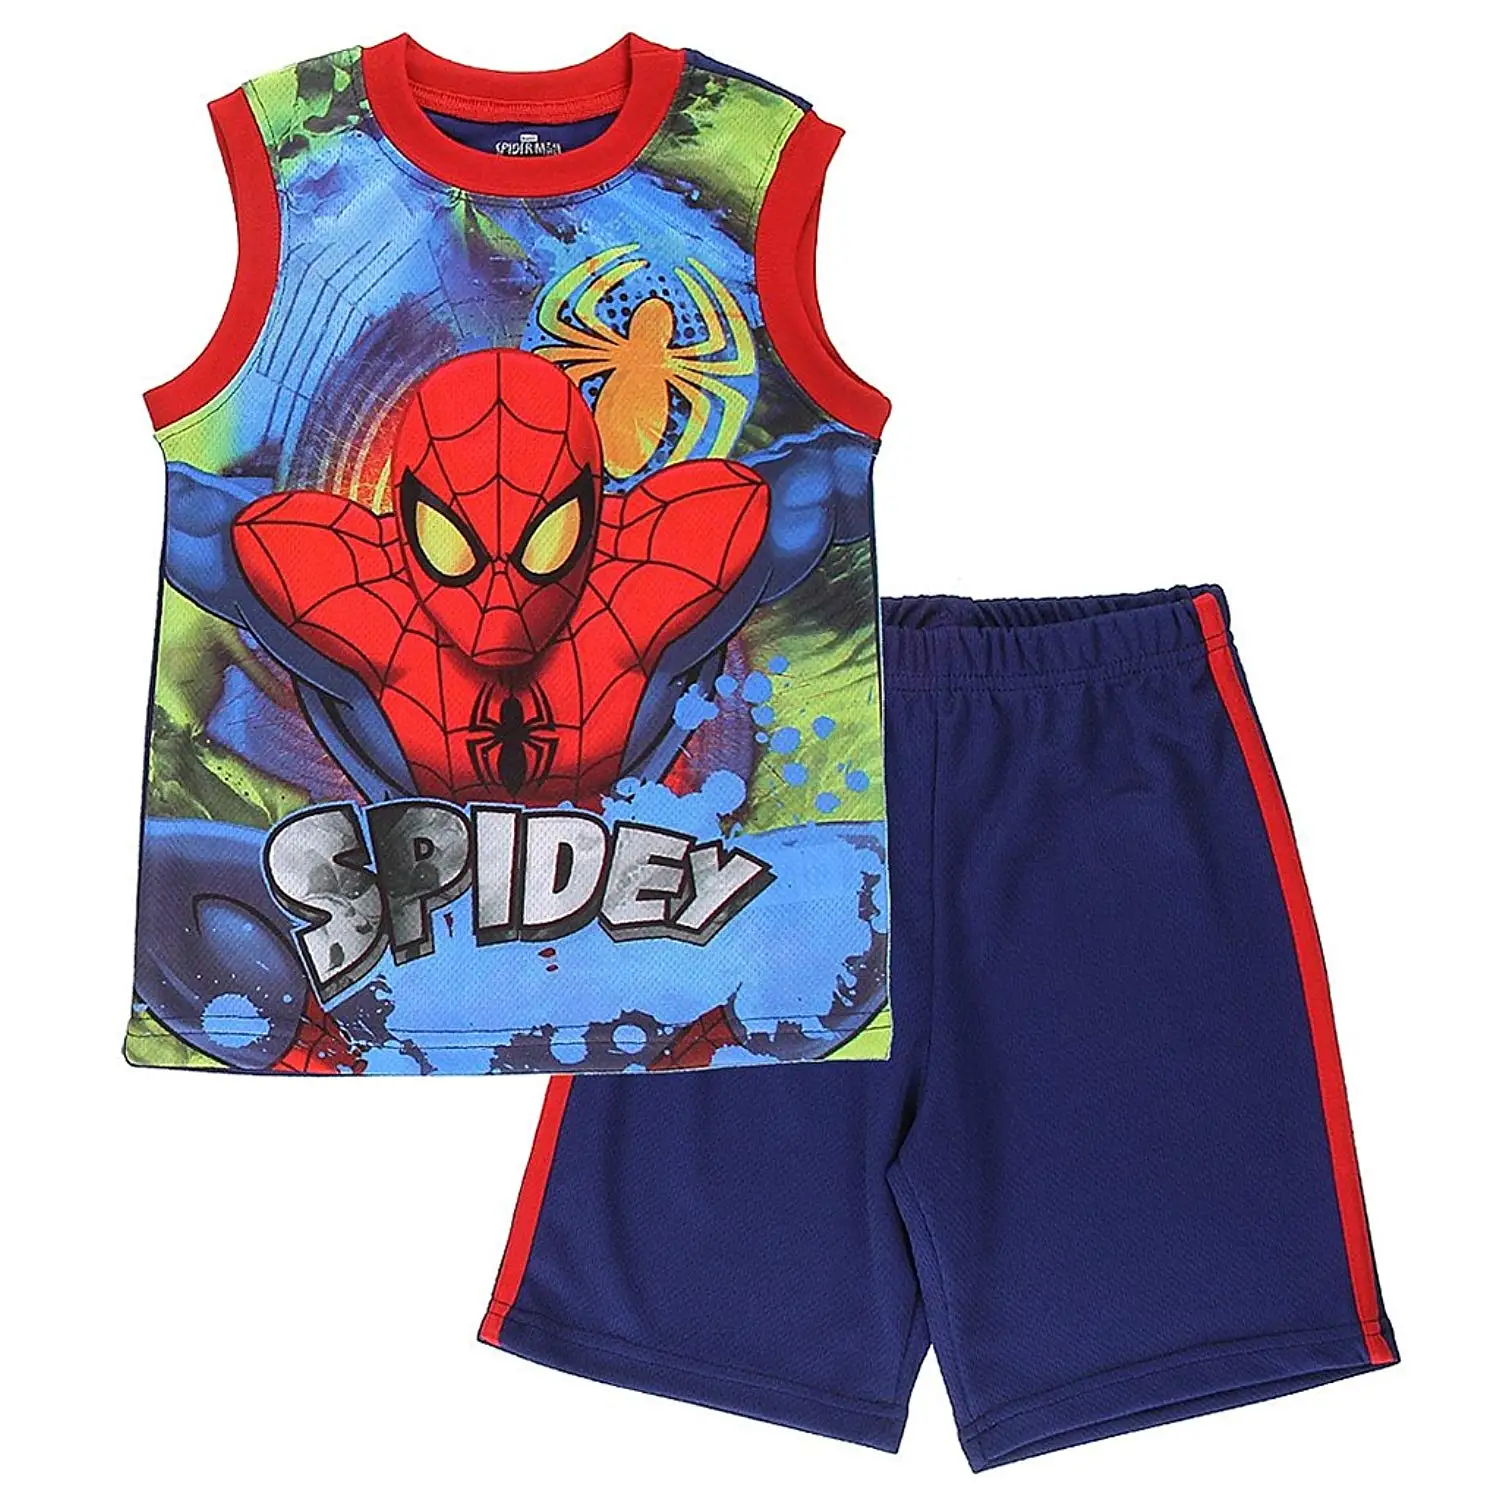 Cheap Spiderman Board Shorts, find Spiderman Board Shorts deals on line